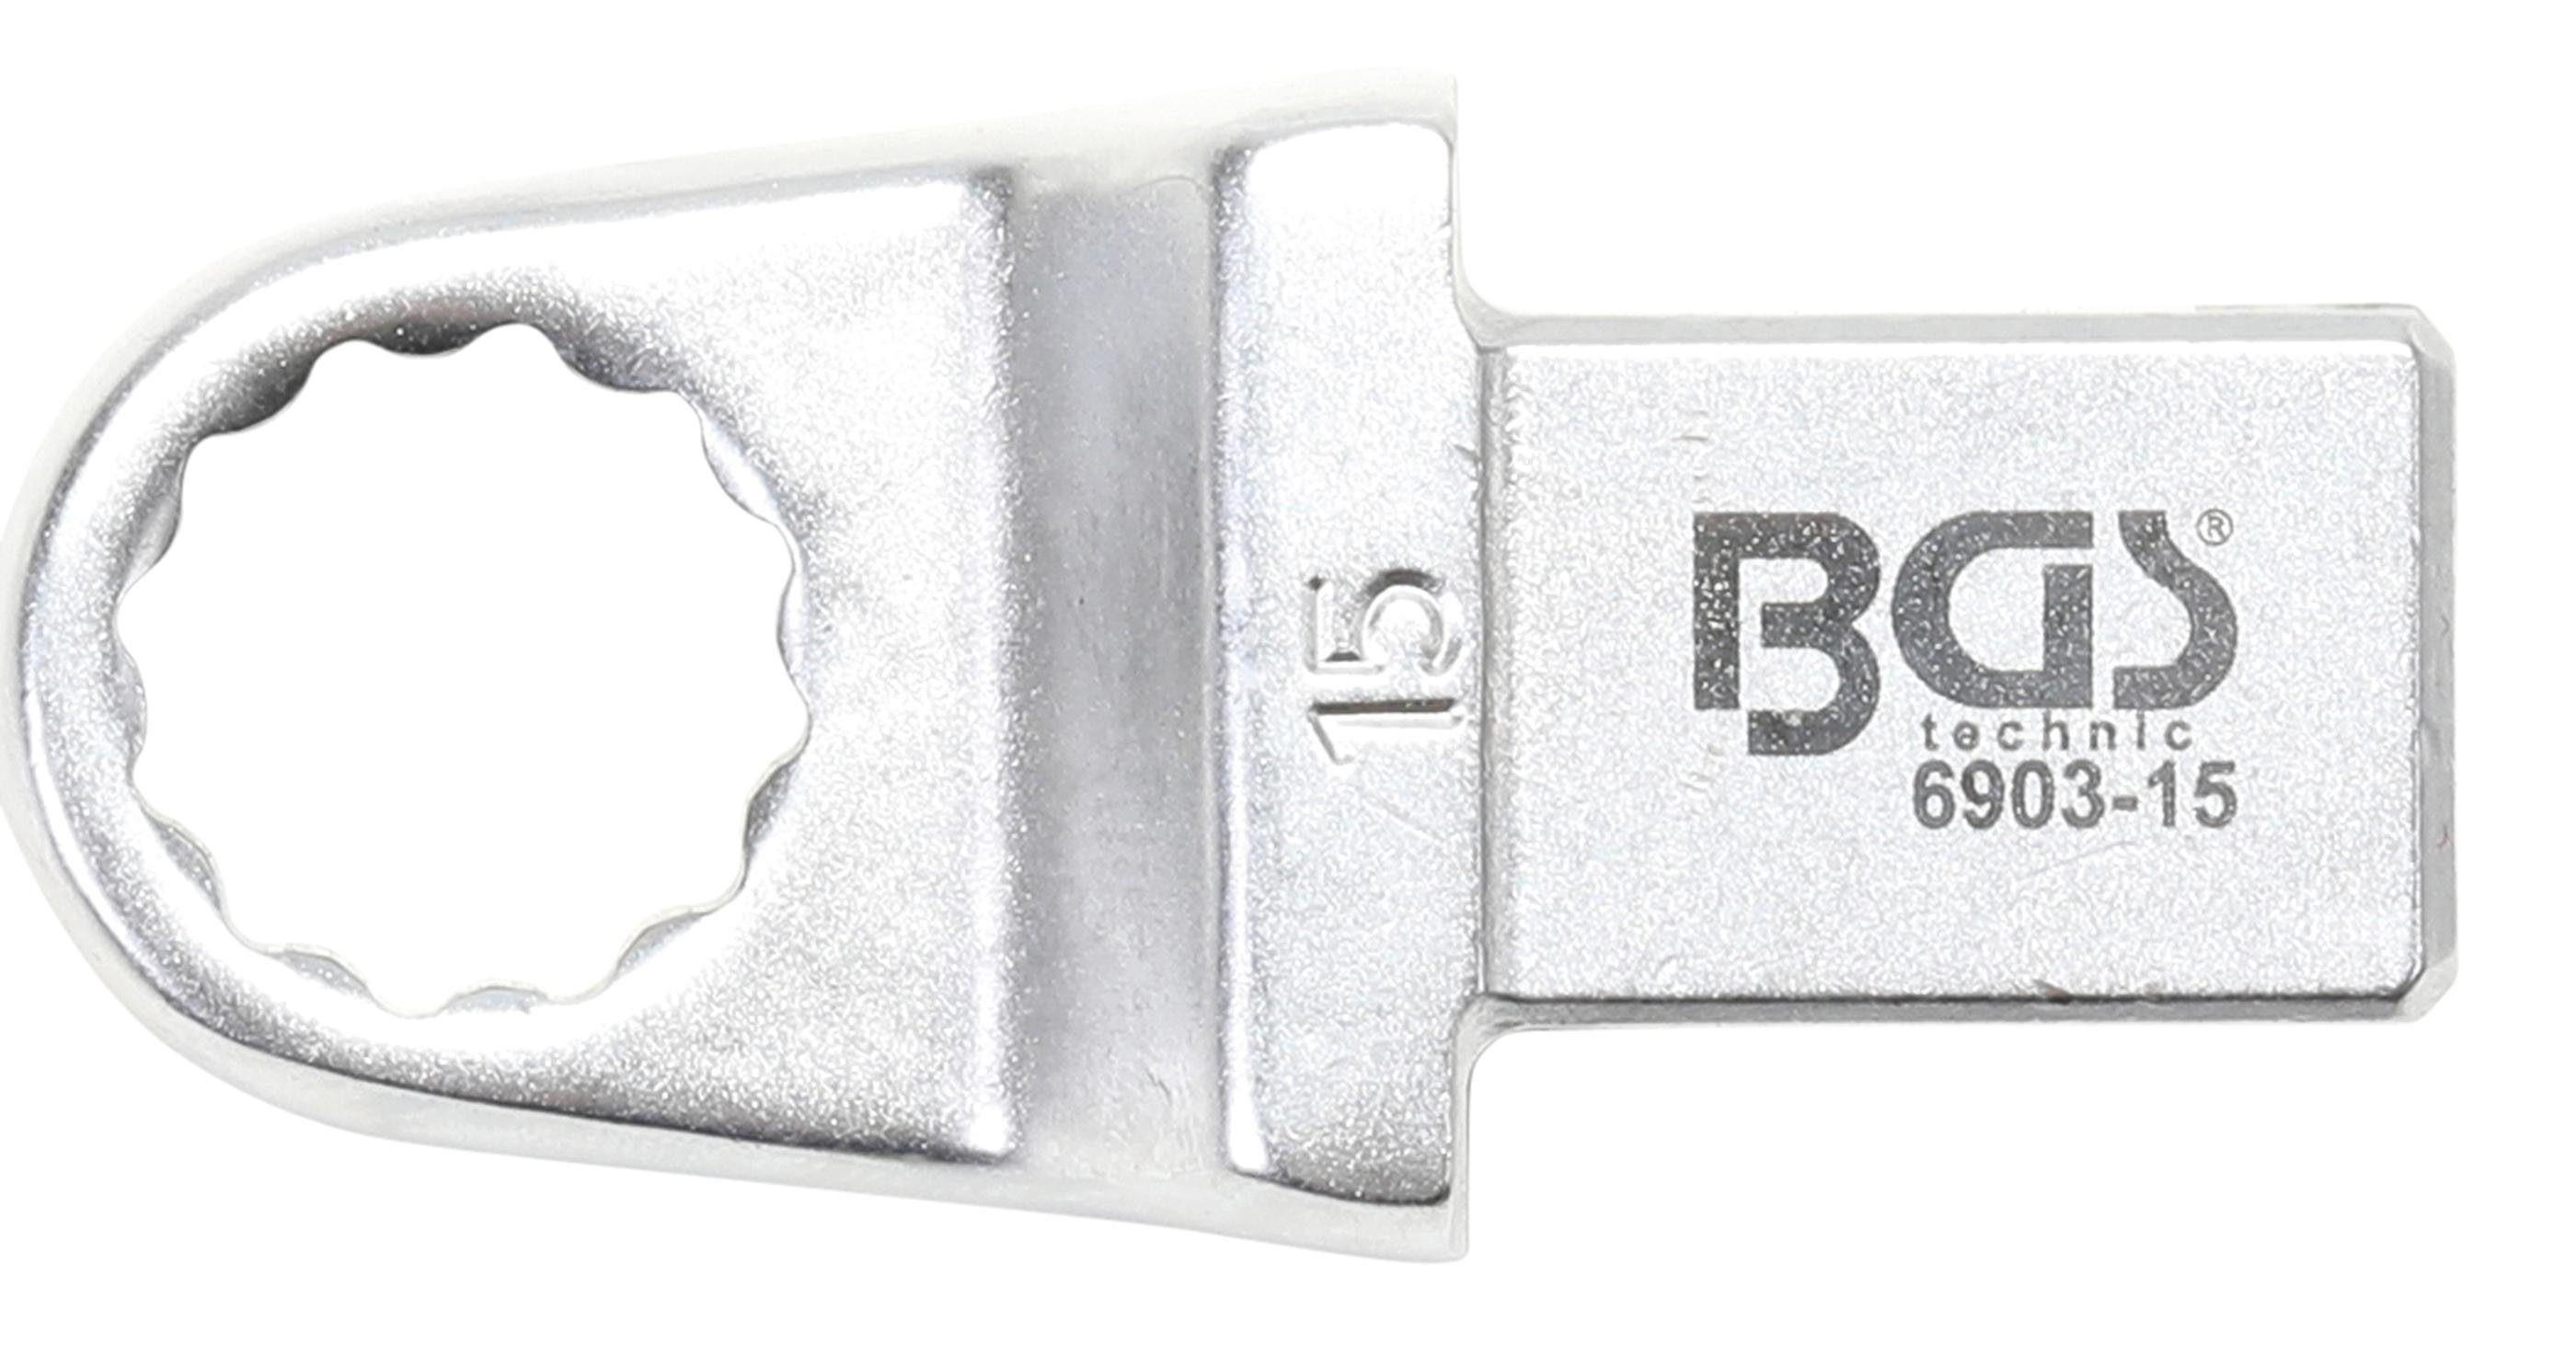 BGS technic Ausstechform Einsteck-Ringschlüssel, 15 mm, Aufnahme 14 x 18 mm